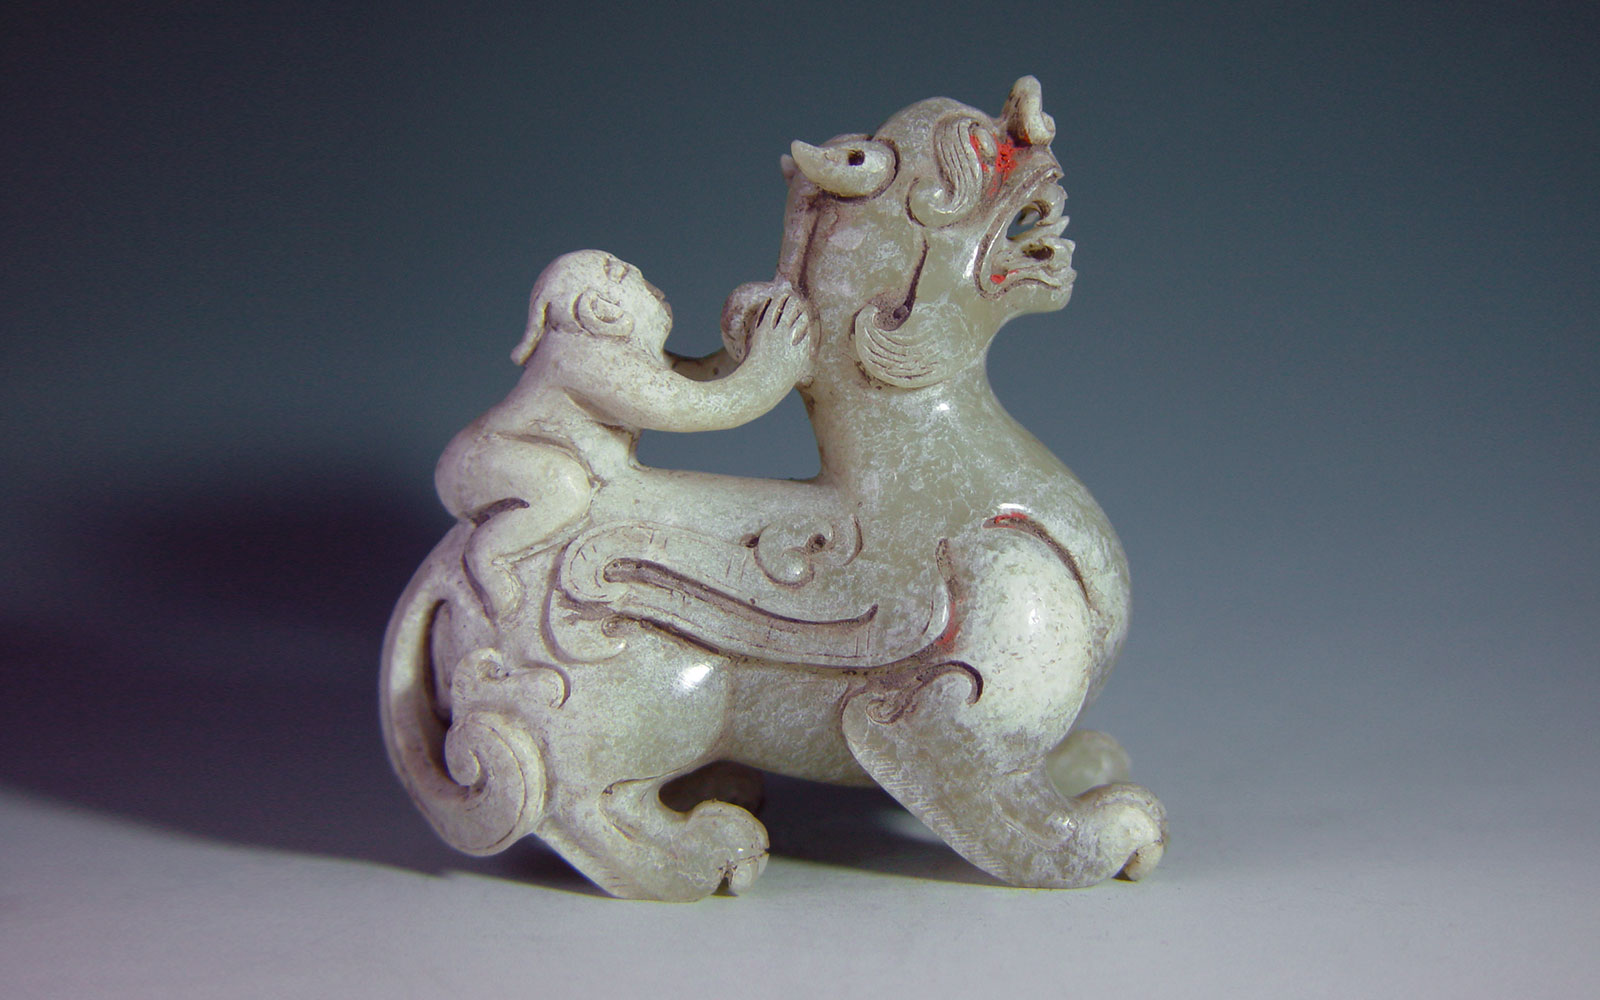 東漢 青玉仙人騎瑞獸 Archaic Jade Figure Riding A Mythical Beast, Eastern Han dynasty (25-220 CE), 6.5x6.7x3cm